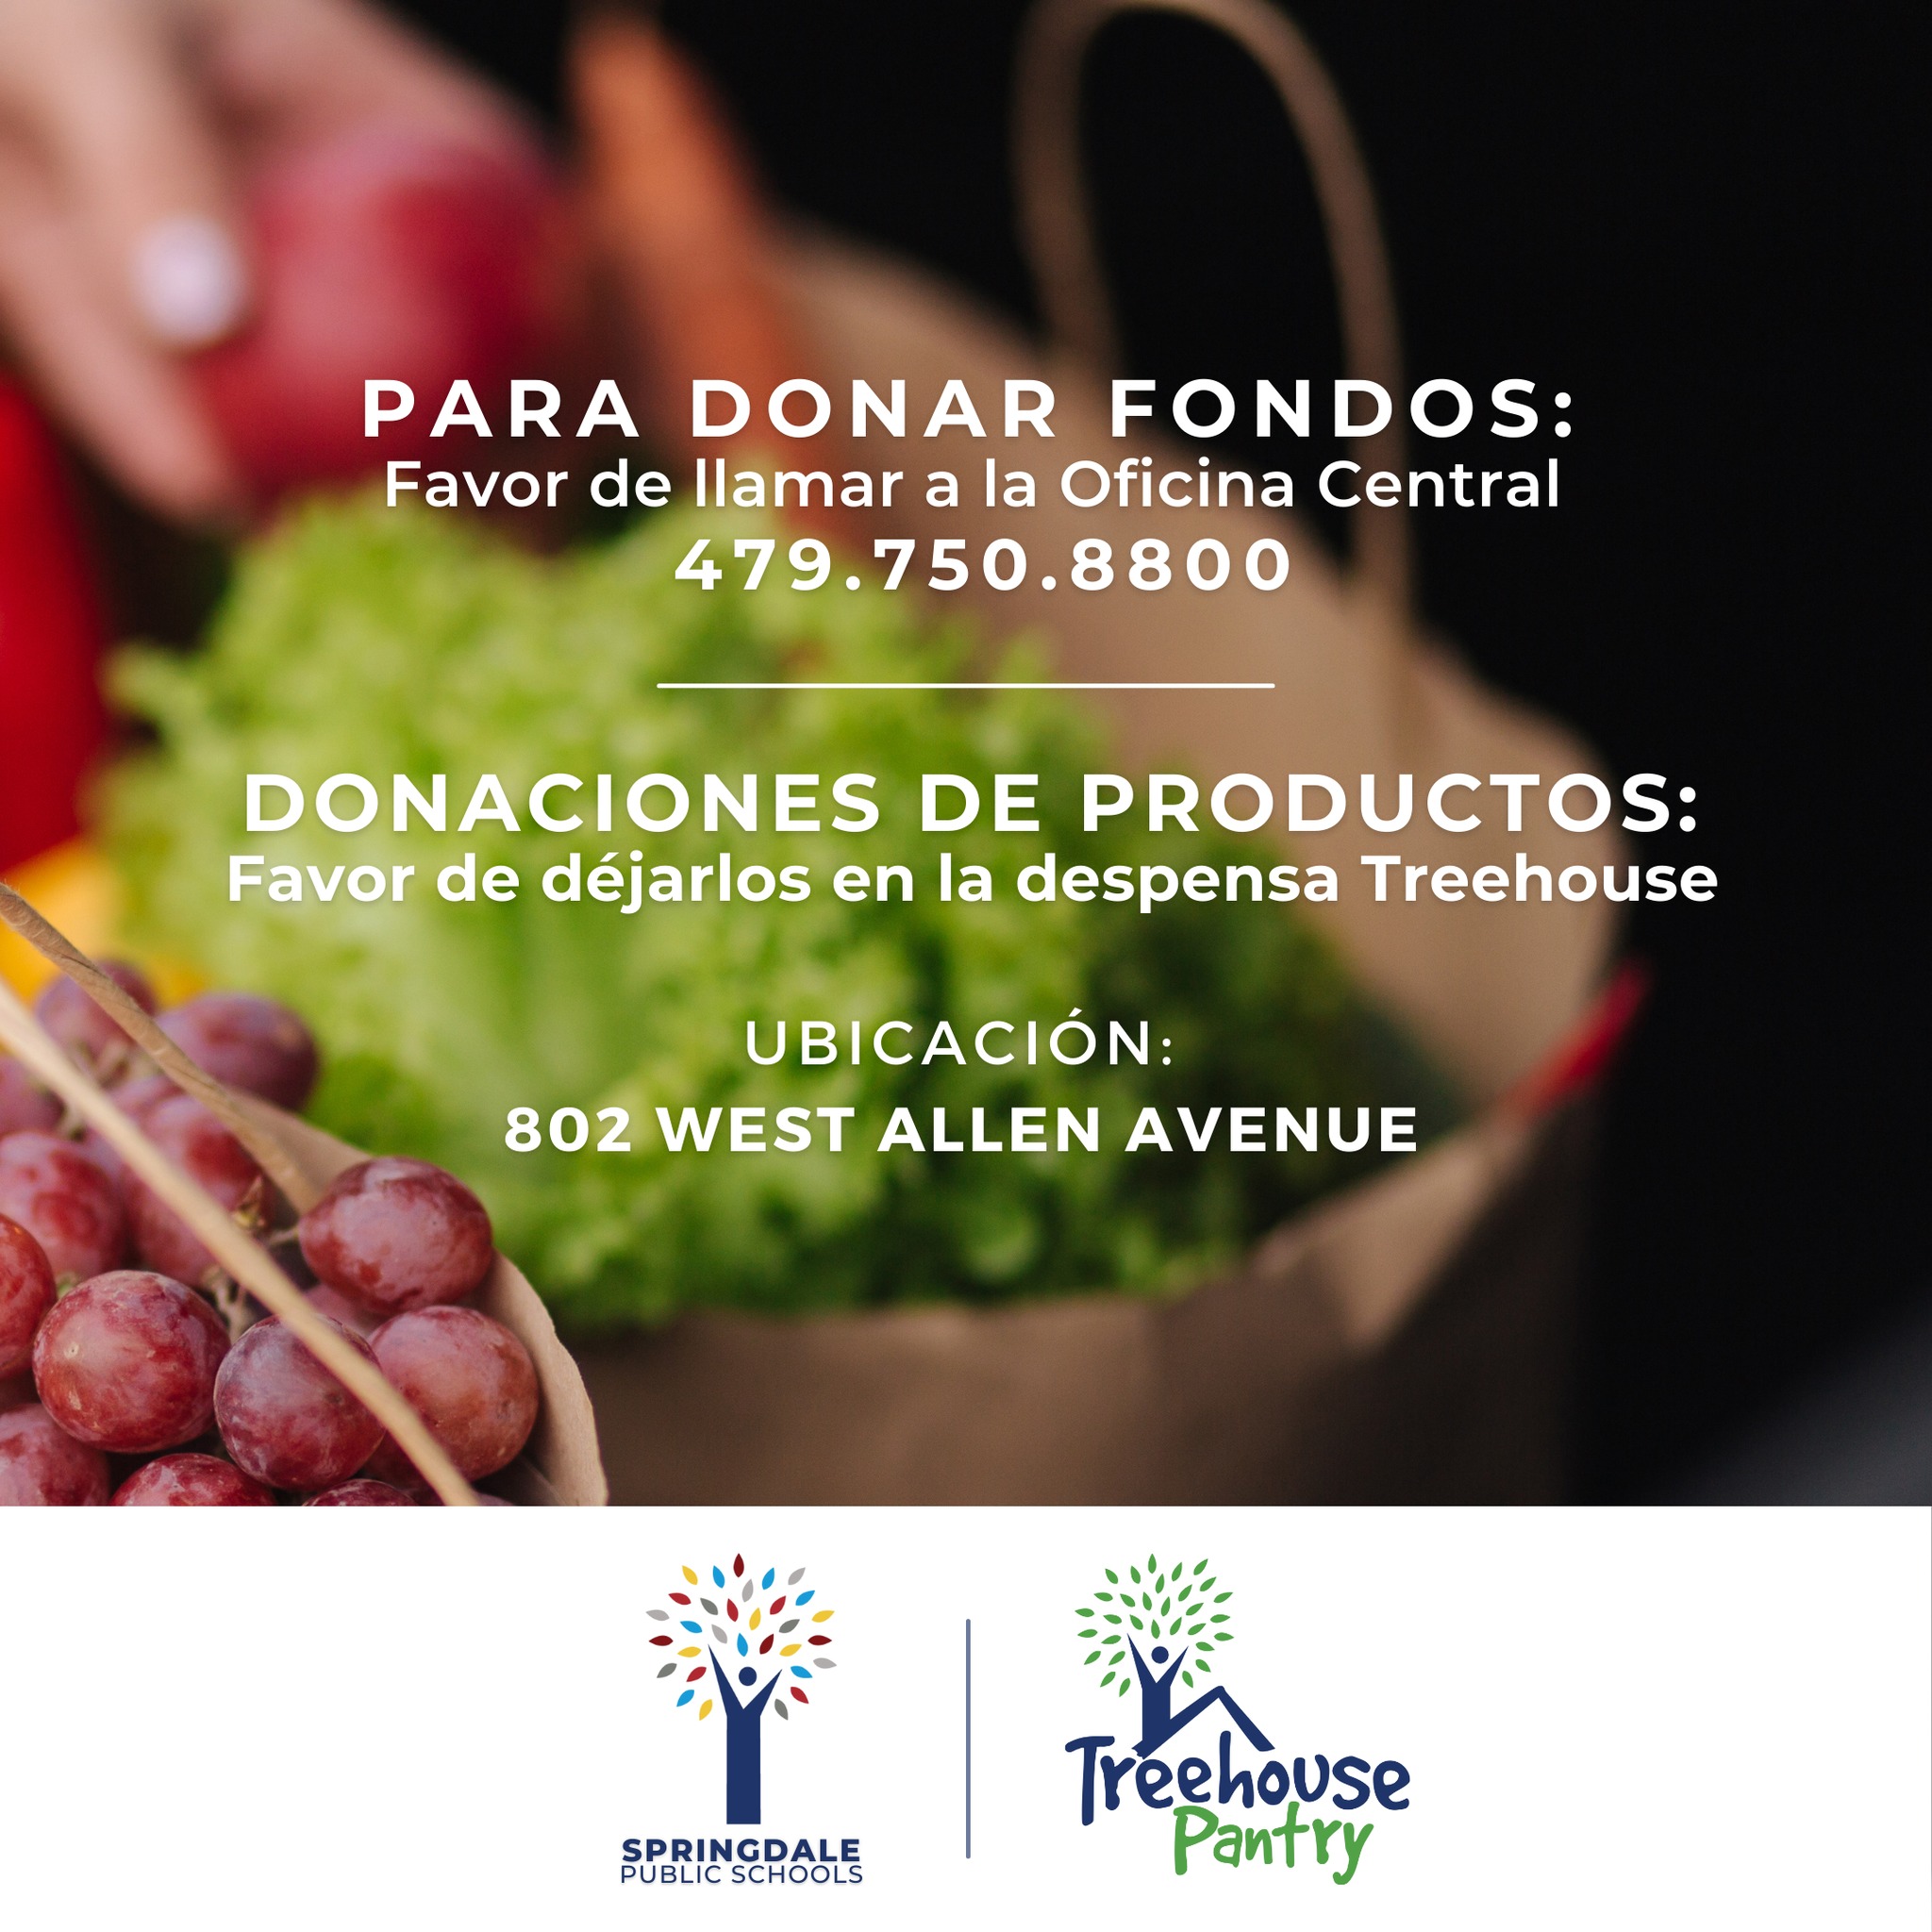 Donation Graphic in Spanish